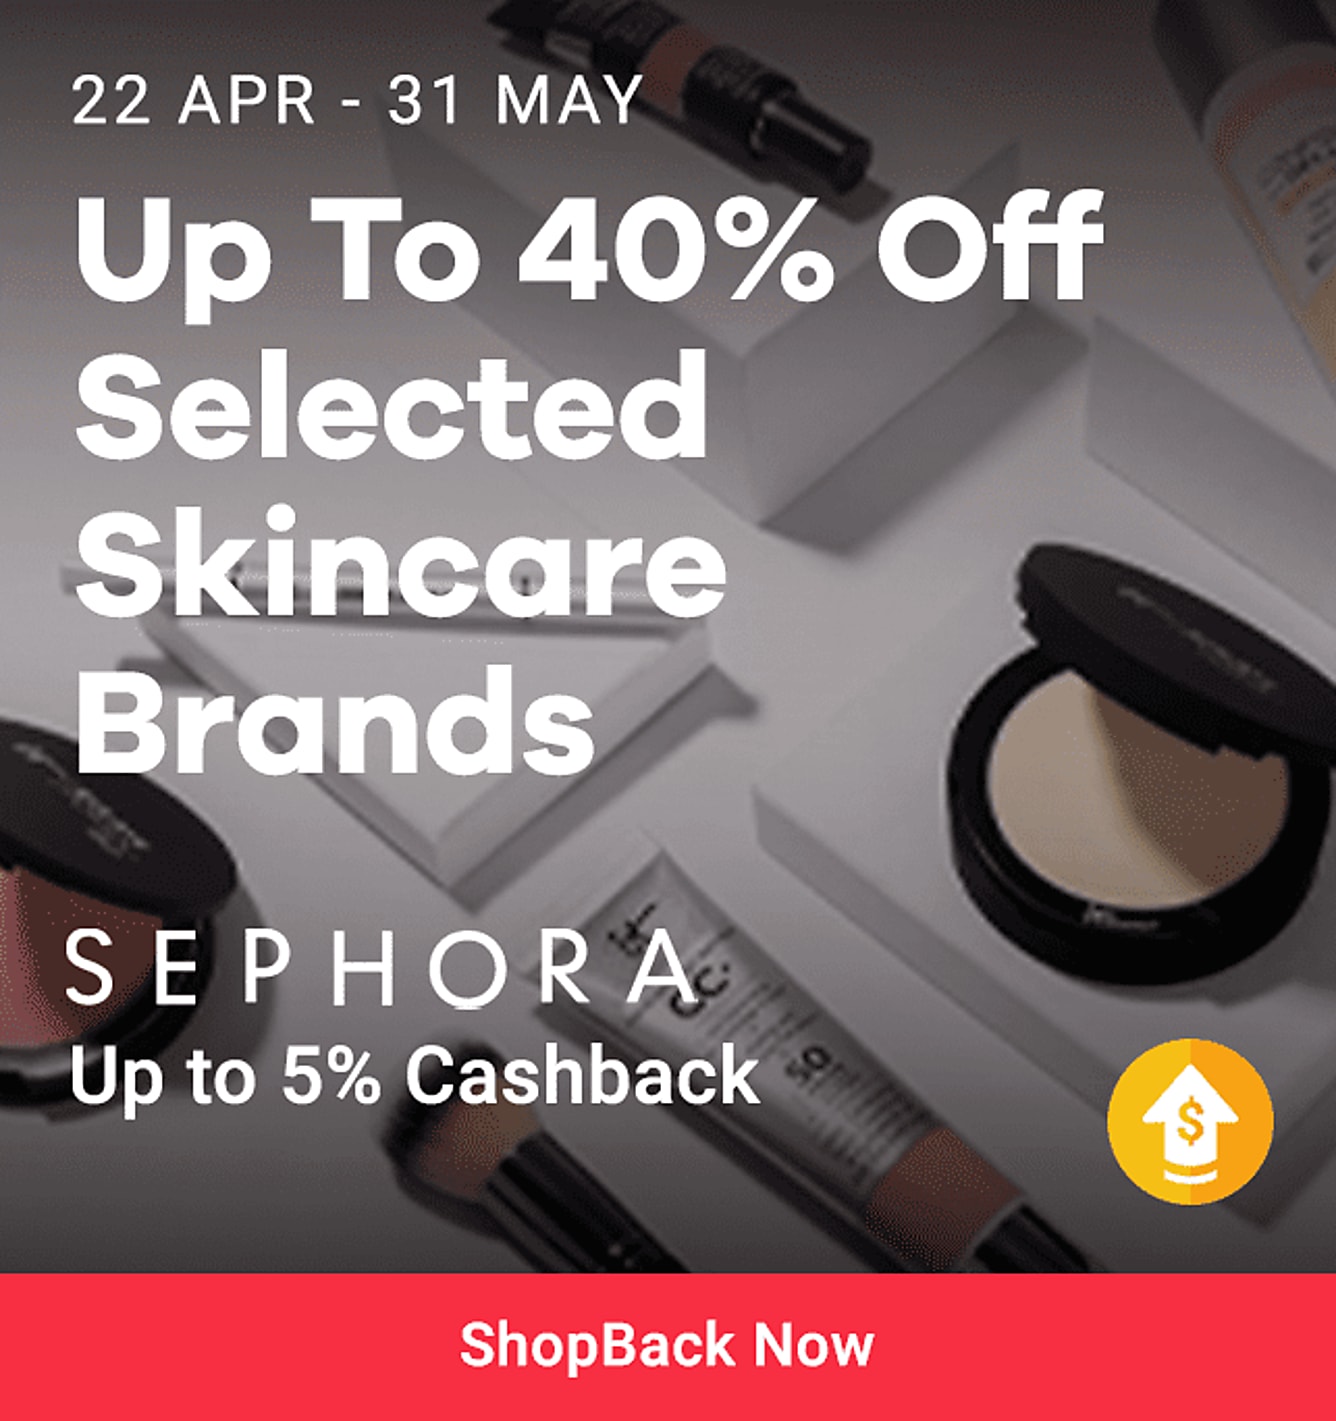 Sephora_Onsite_22 Apr-31 May 2020